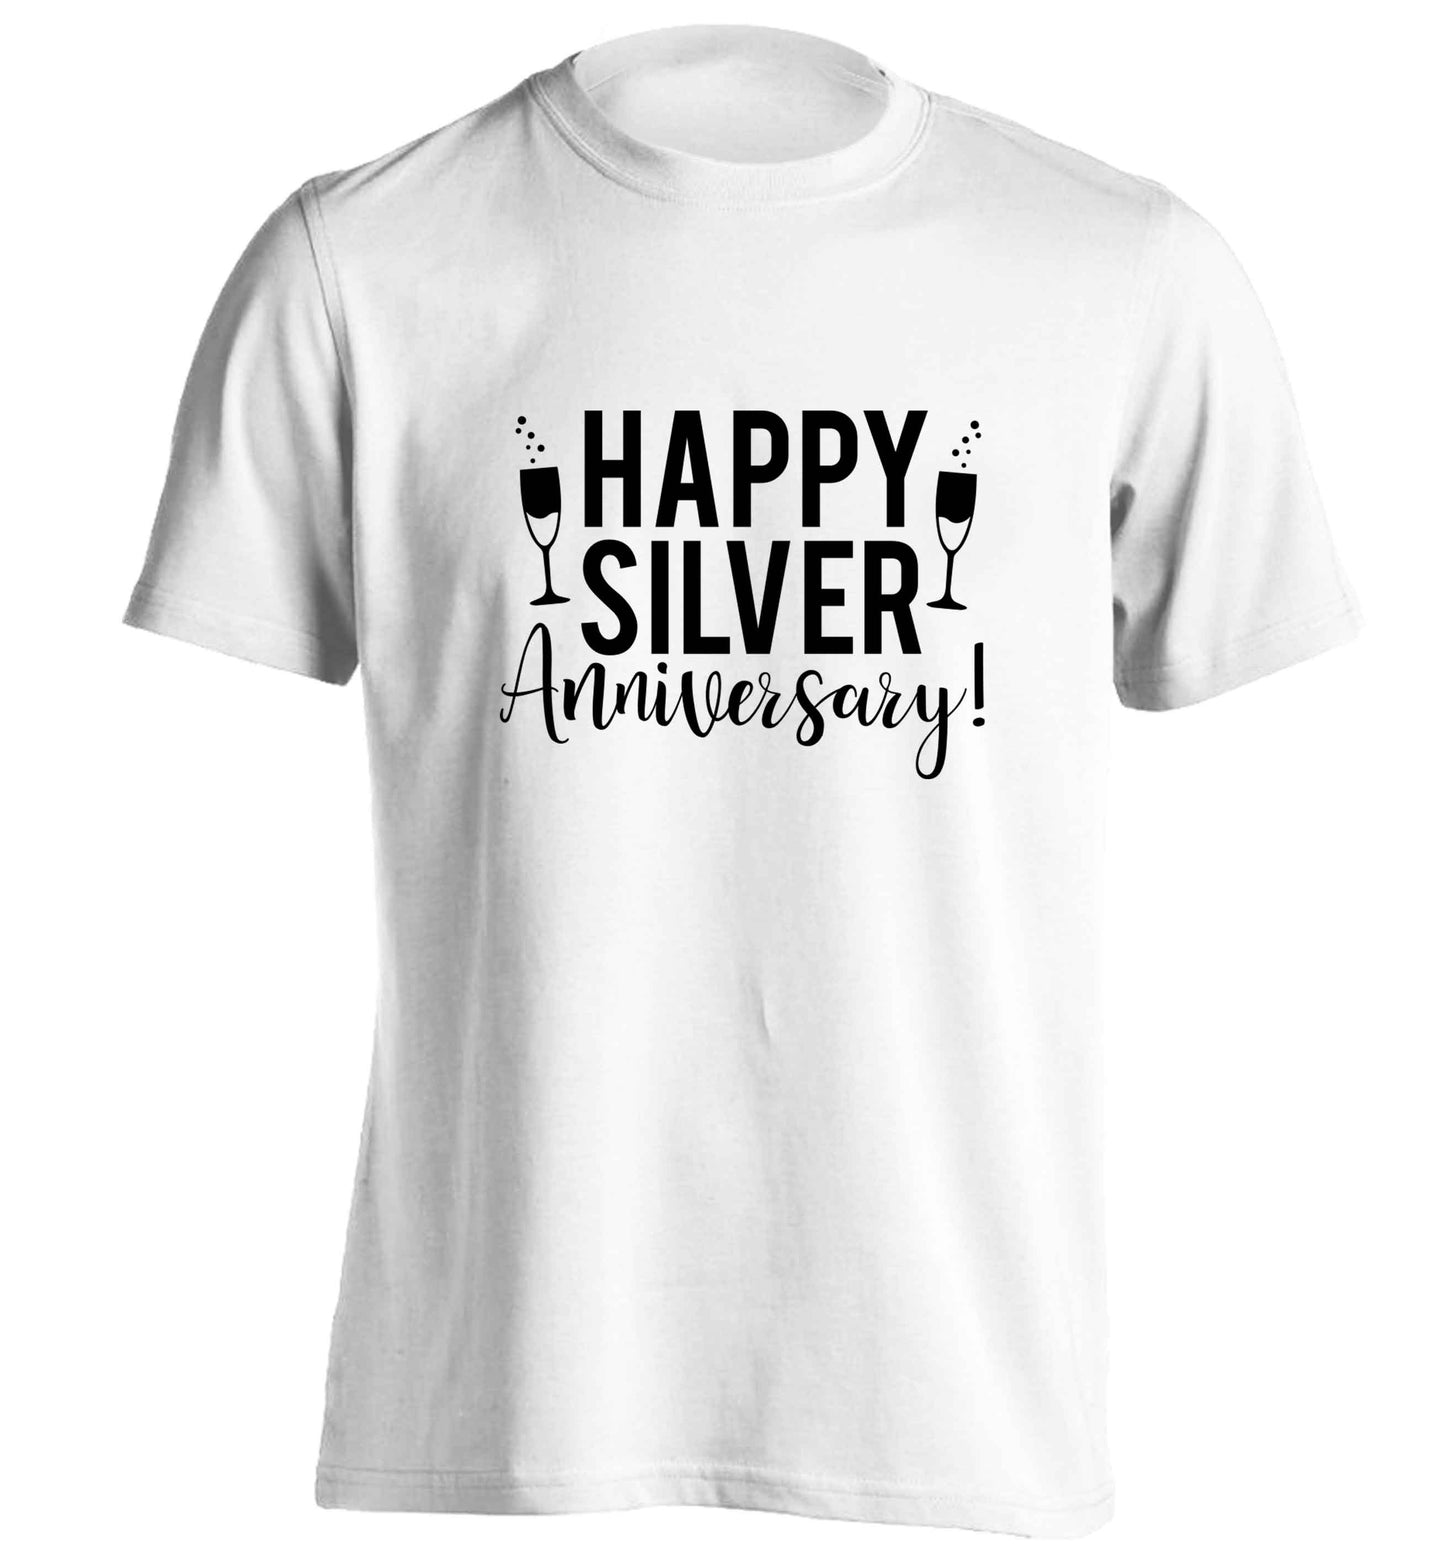 Happy silver anniversary! adults unisex white Tshirt 2XL